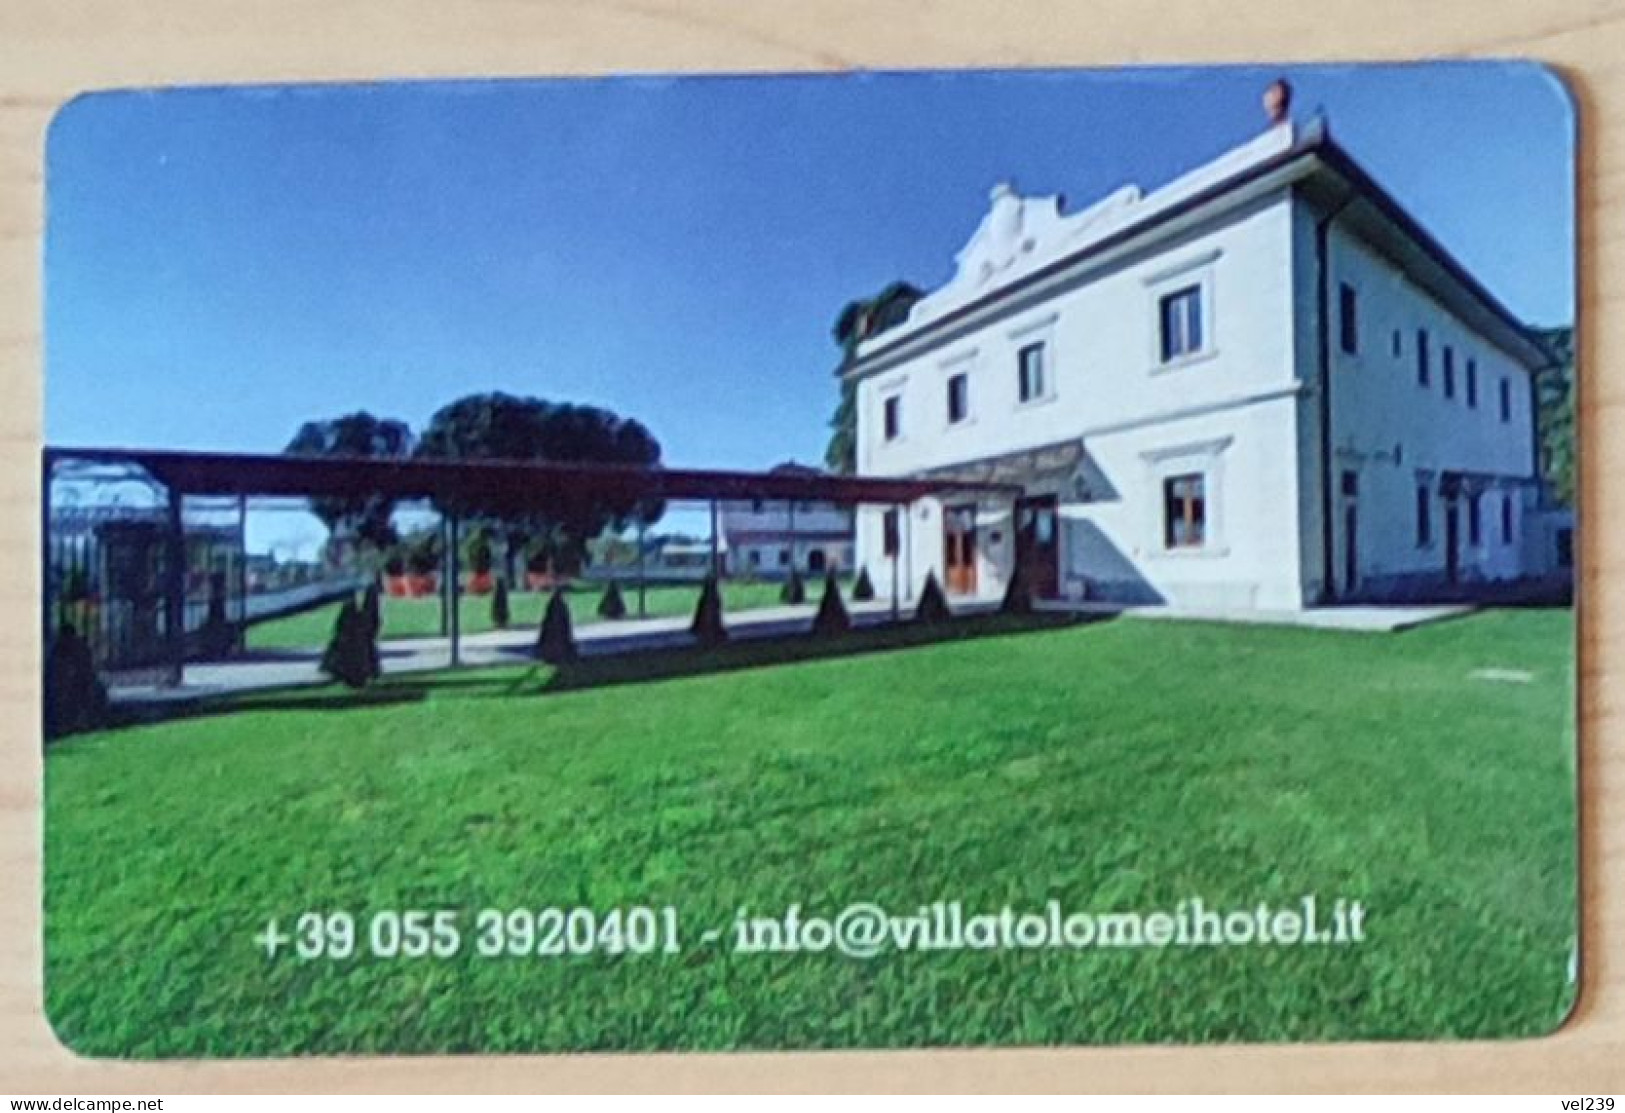 Italy. Villa Tolomei - Hotelsleutels (kaarten)